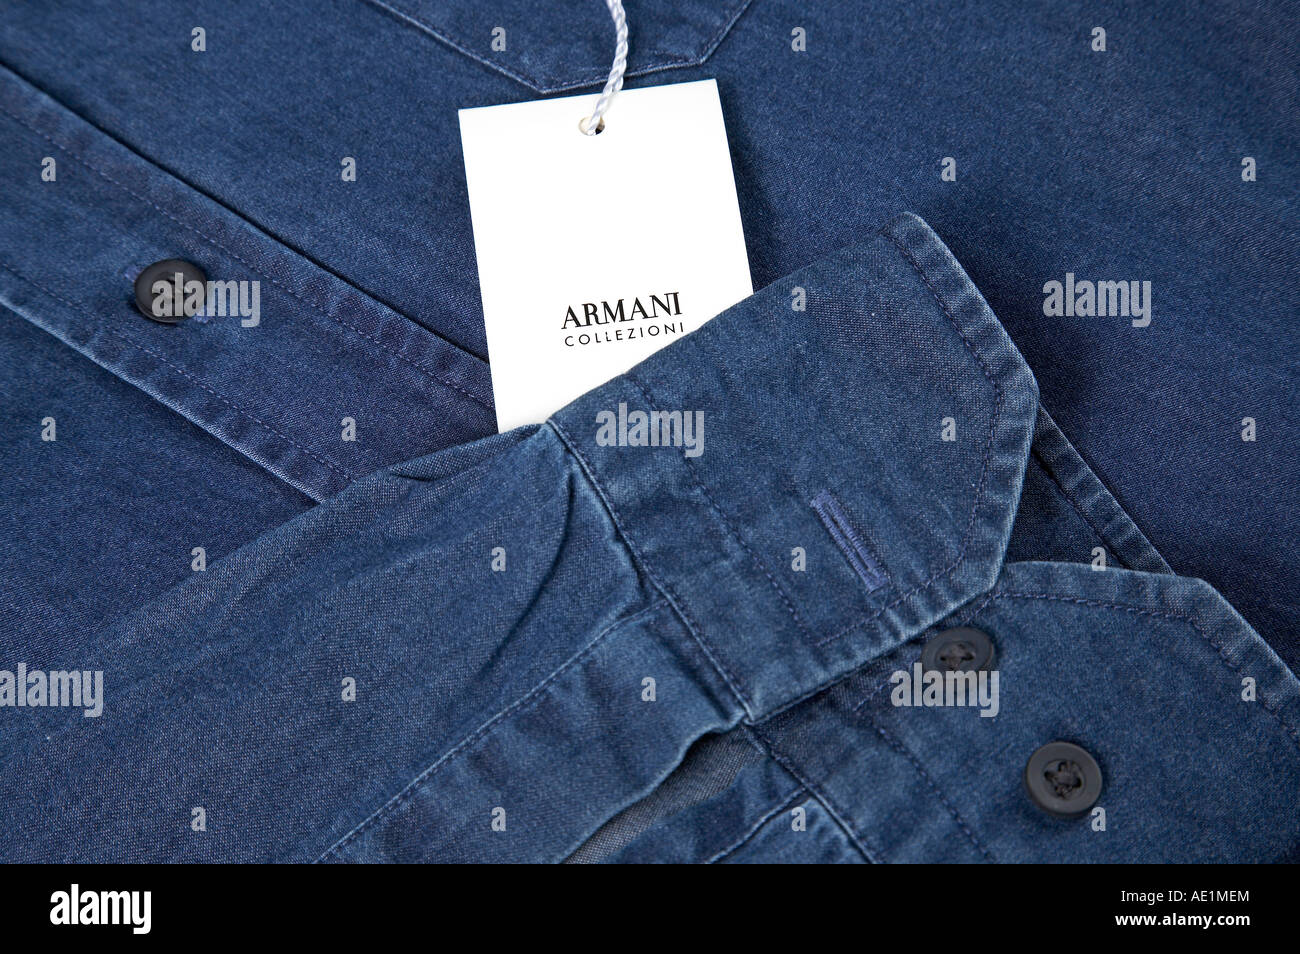 Denim shirt with Armani tag Stock Photo - Alamy